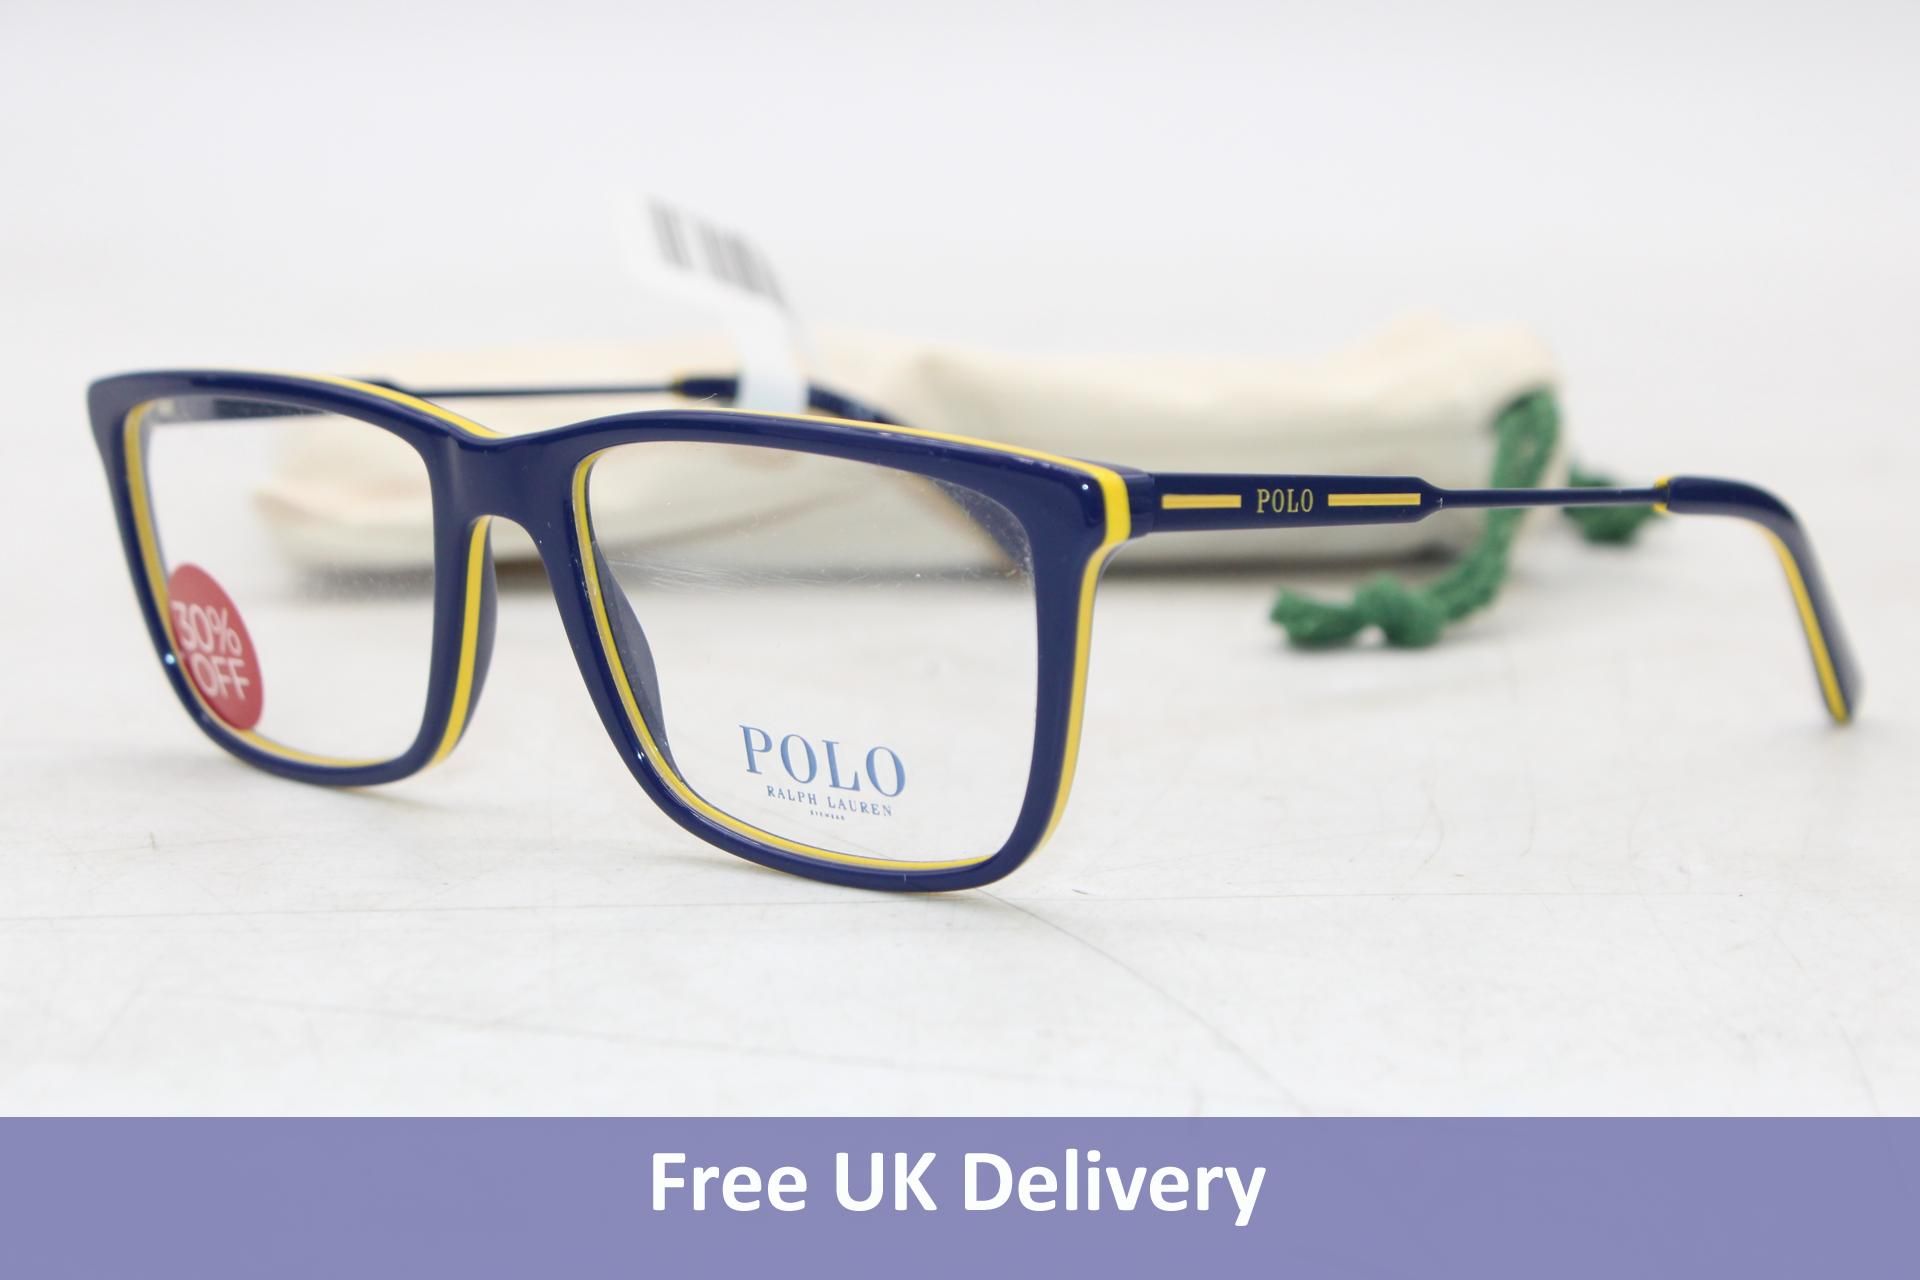 Ralph Lauren Polo Glasses, Blue/Yellow Frame with Demo Lenses, PH2216. Box damaged